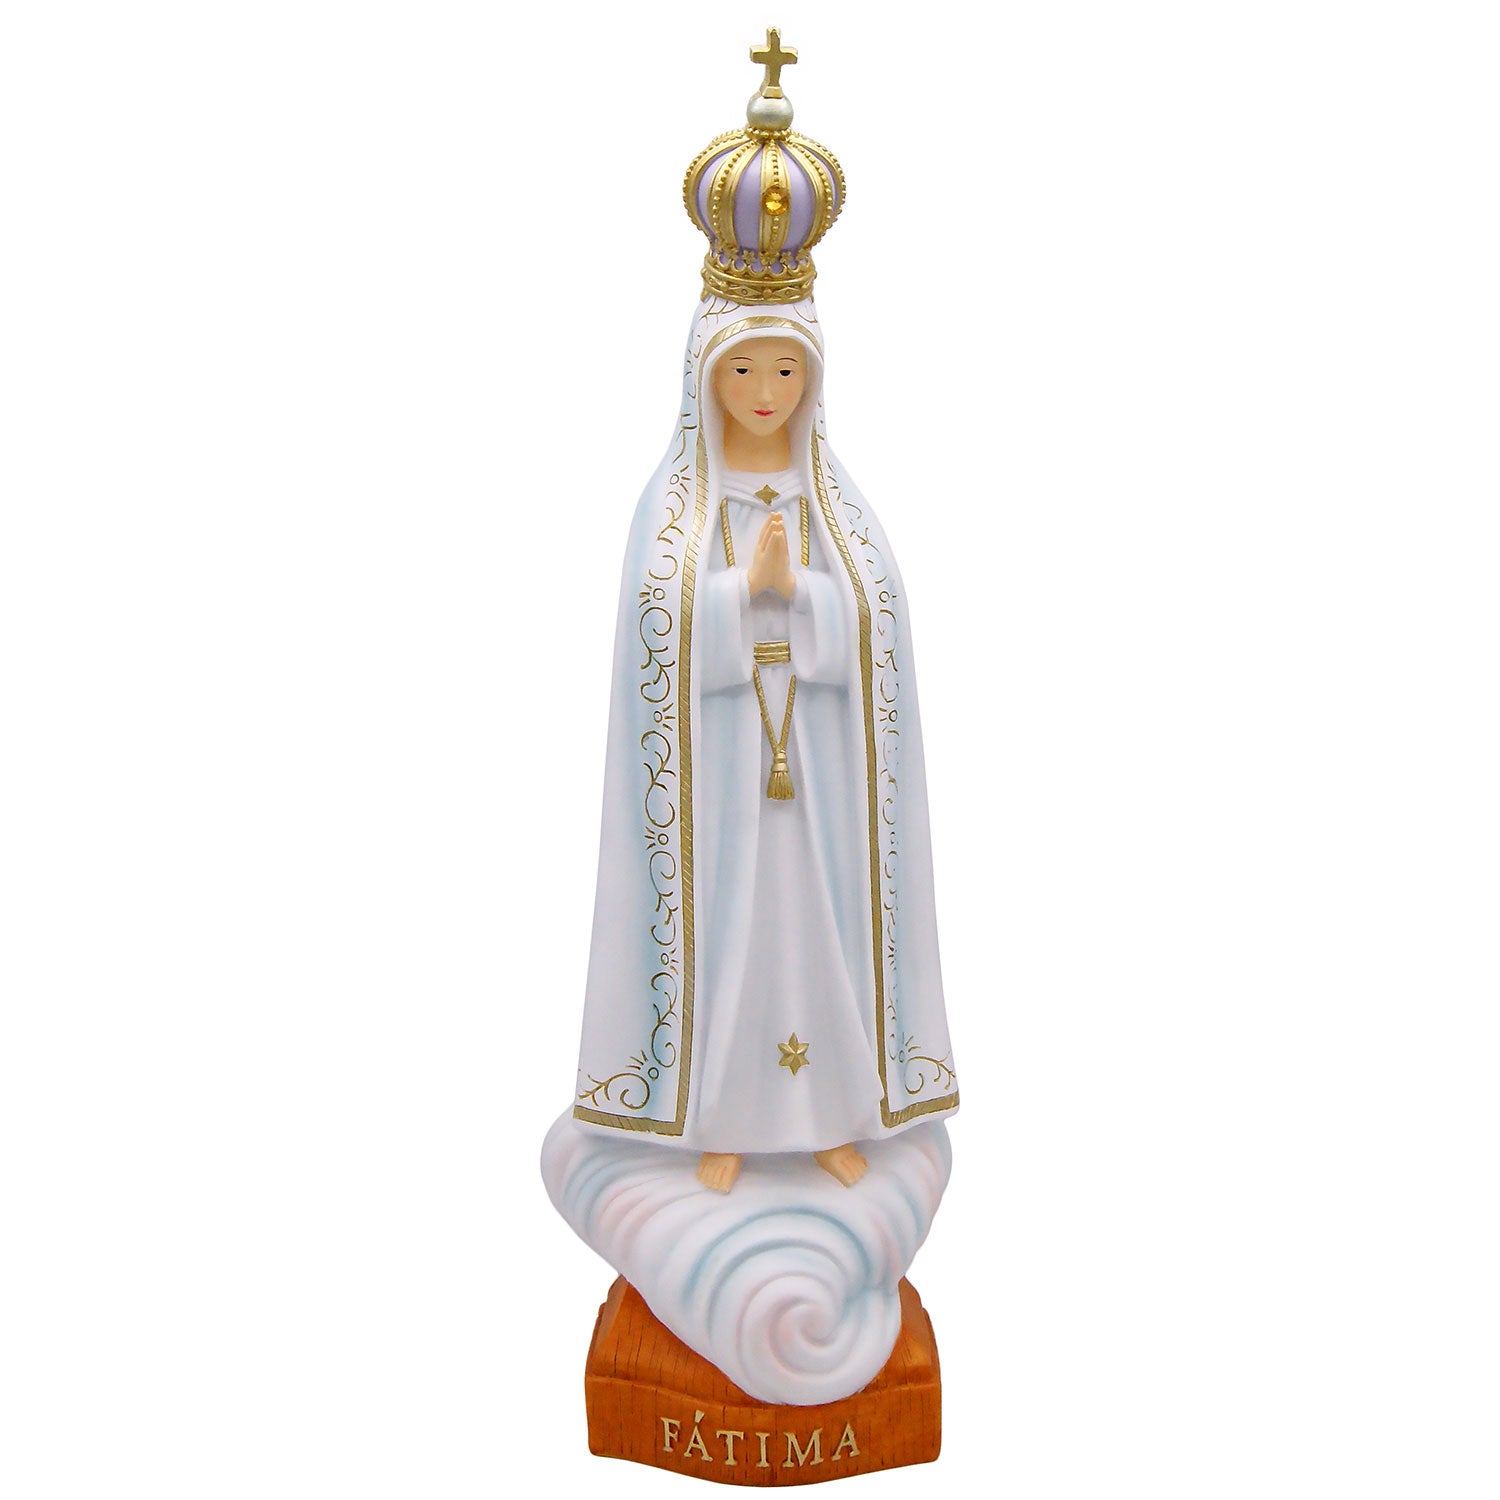 Our Lady of Fatima statue is made in Fatima, Portugal.